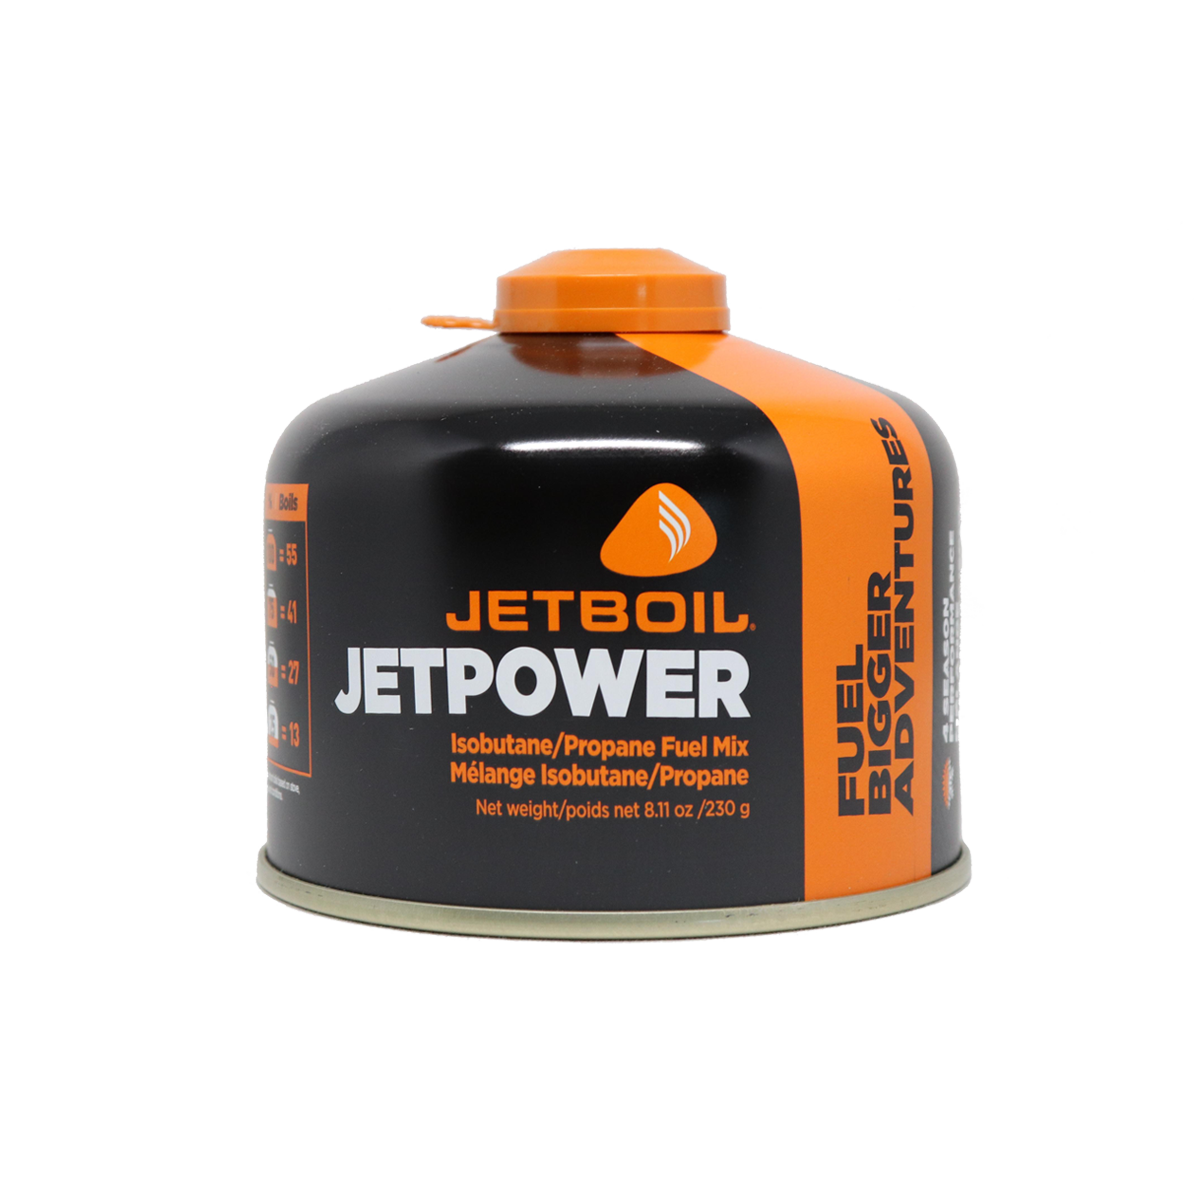 Jetboil Jetpower Fuel - Kartusche